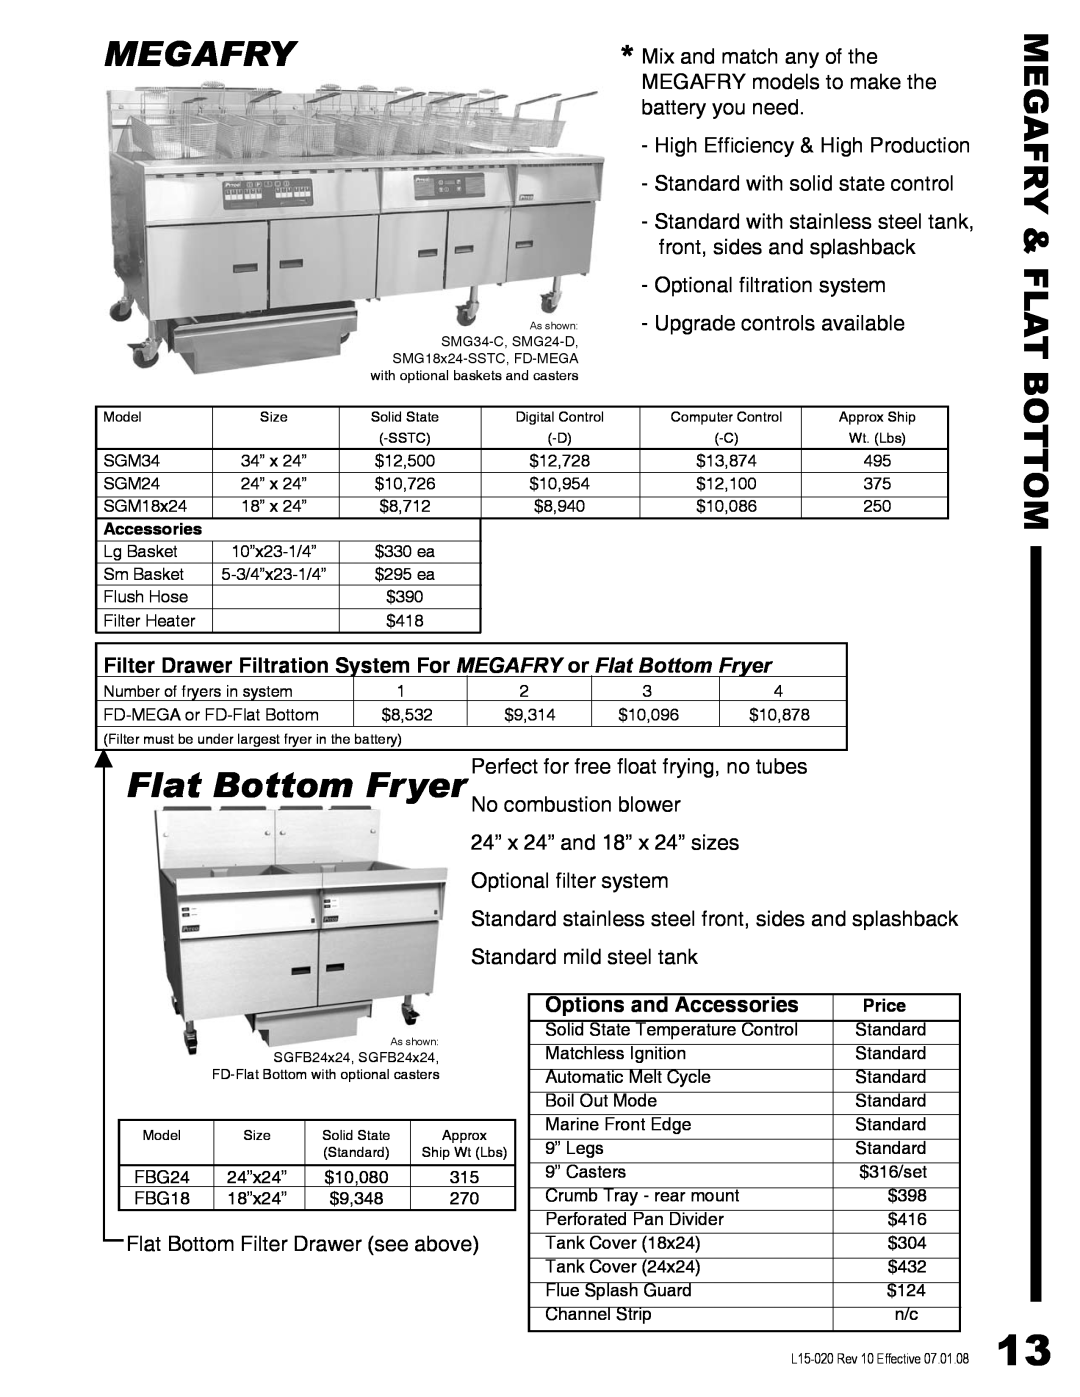 Pitco Frialator SG14DI manual Megafry & Flat Bottom, Filter Drawer Filtration System For MEGAFRY or Flat Bottom Fryer 